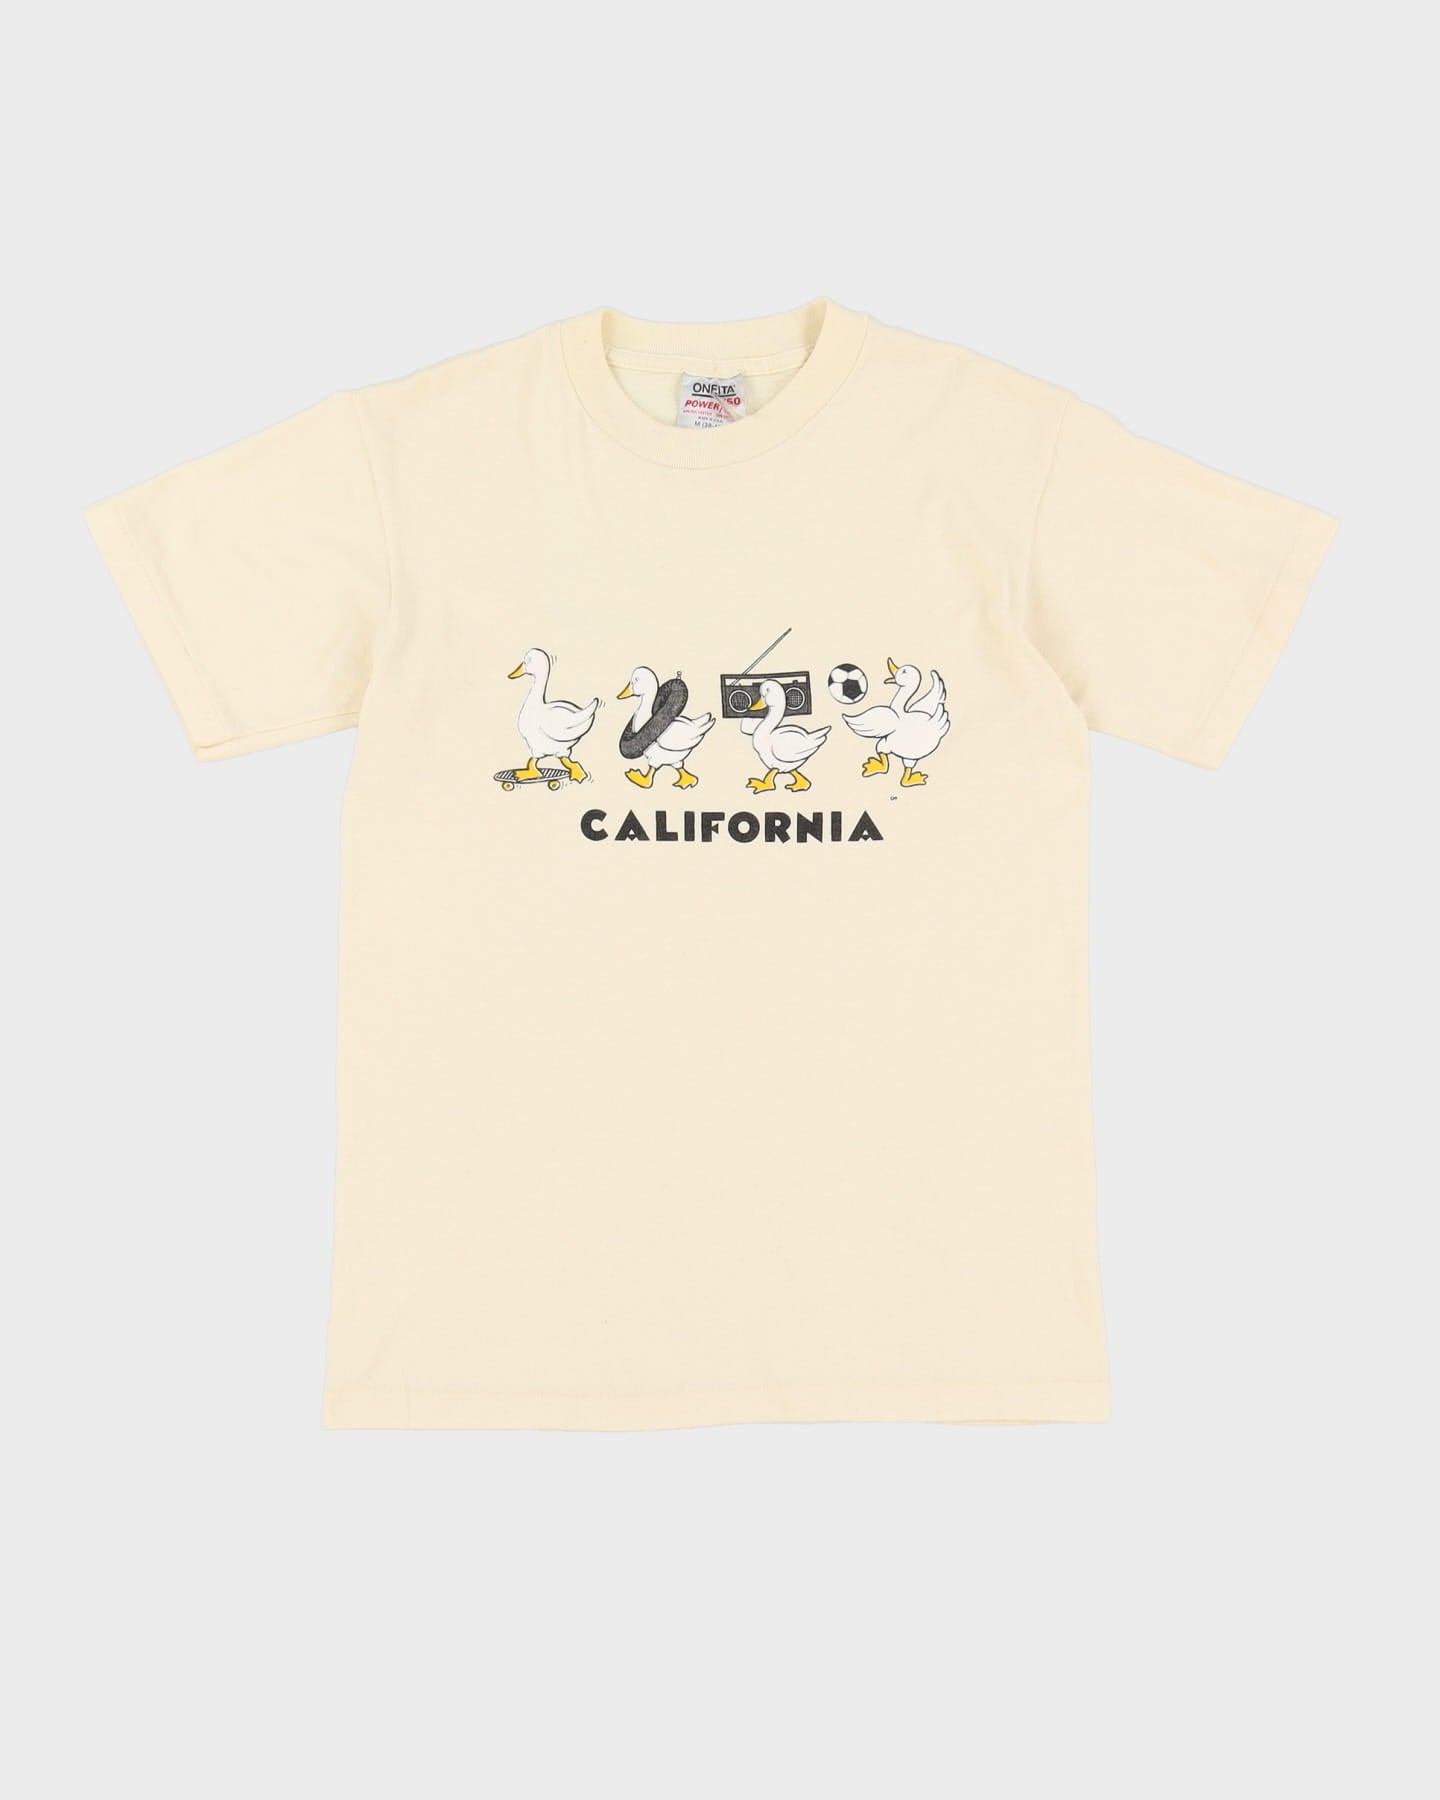 Vintage 90s California Ducks Yellow Graphic Single Stitch T-Shirt - M